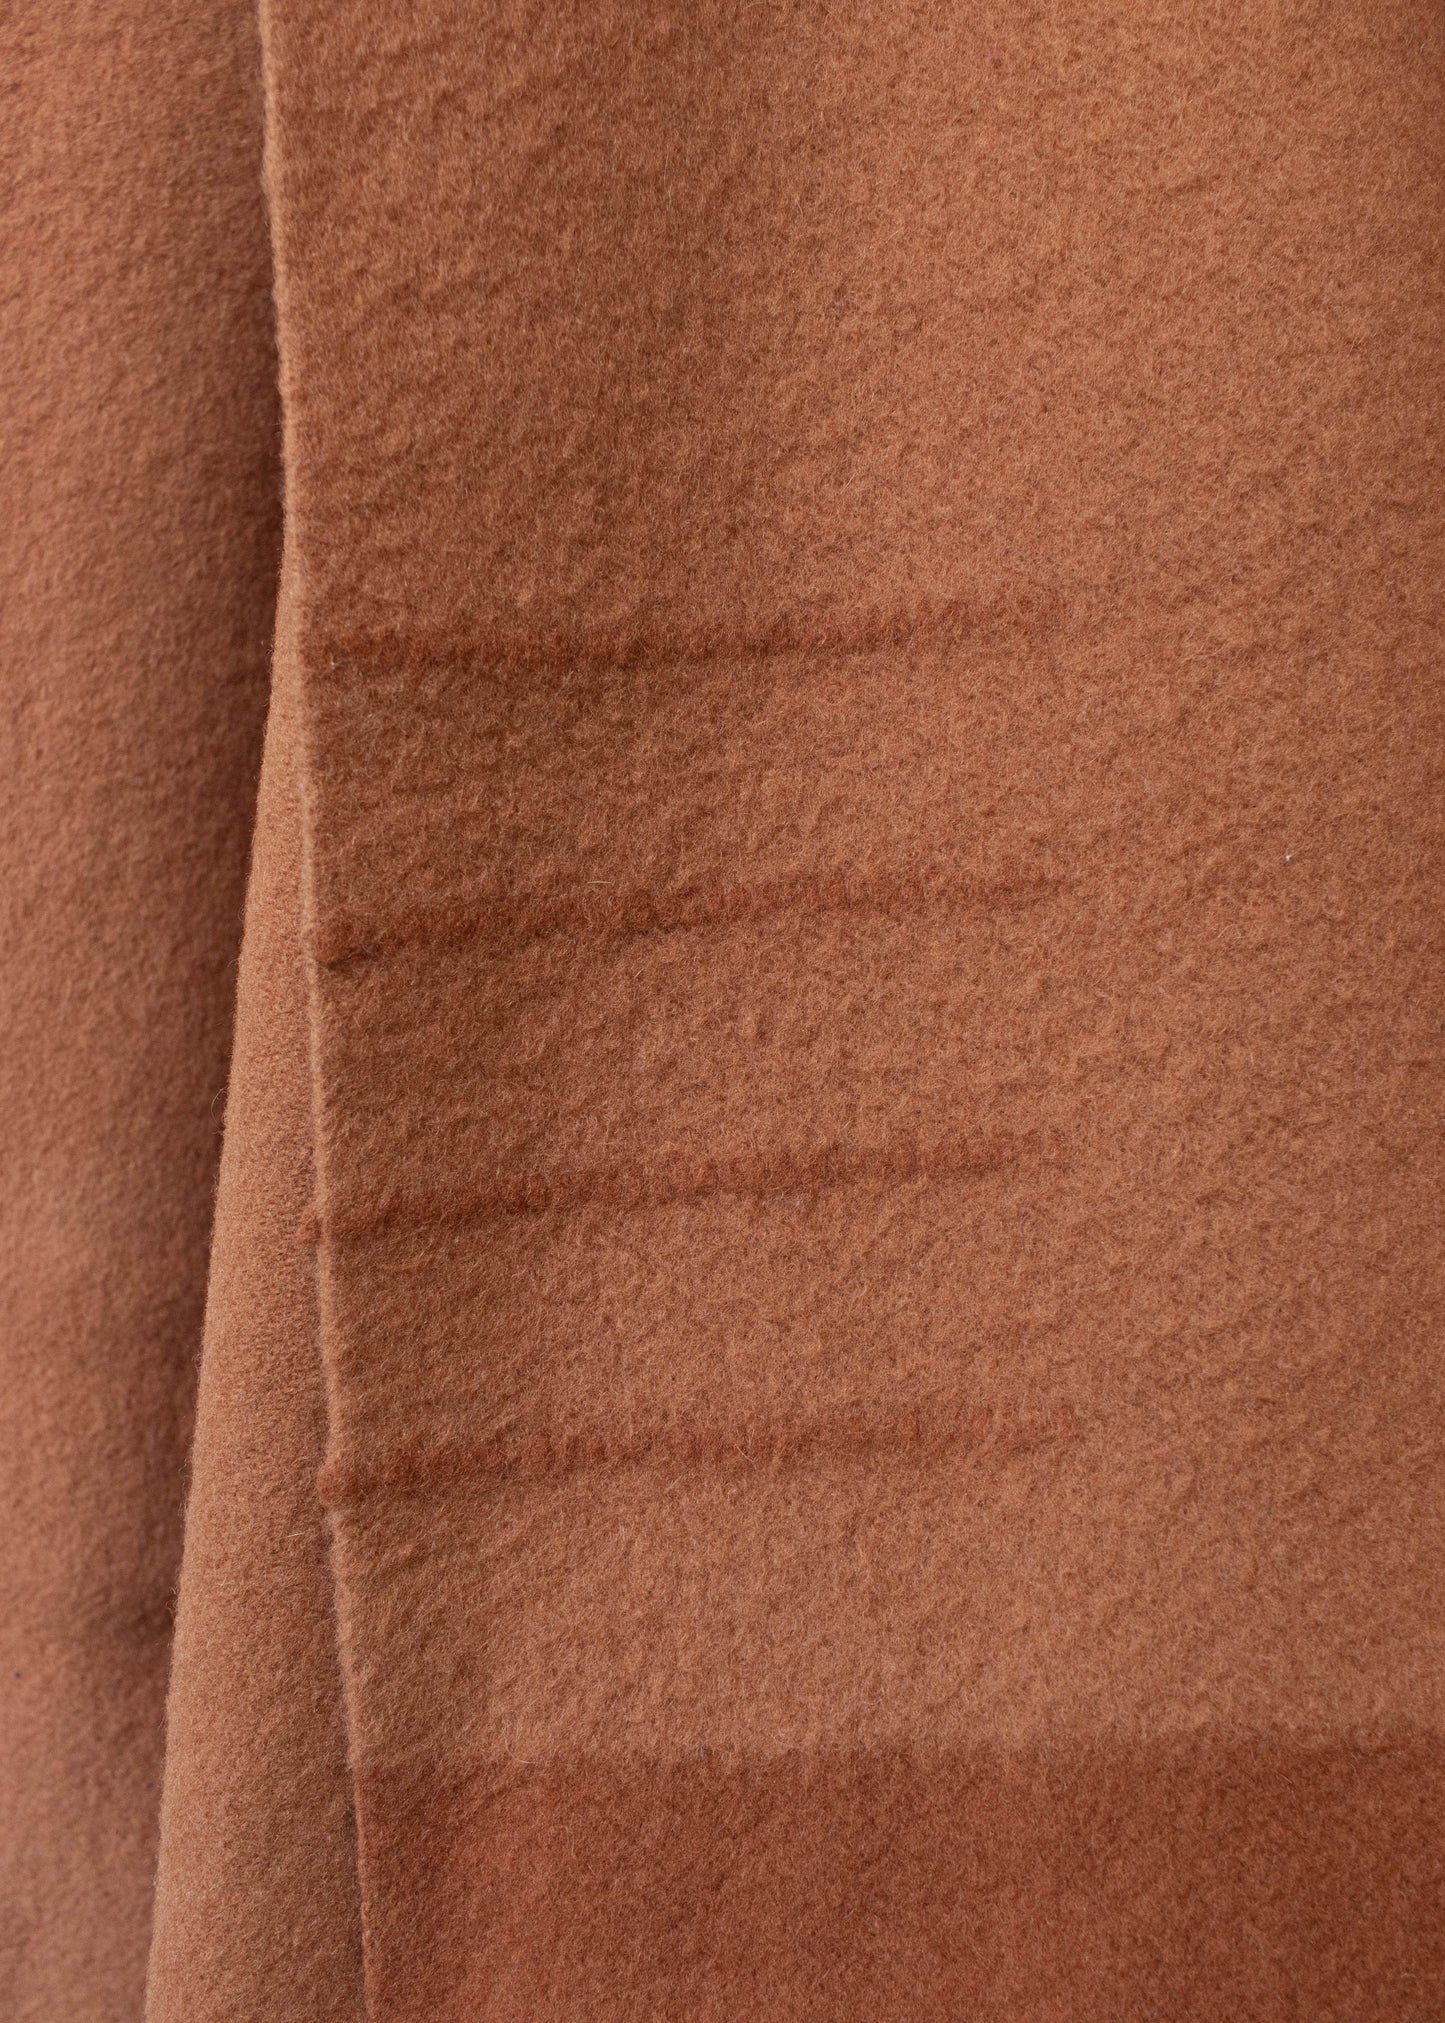 Vintage 1960s Hudson's Bay 4 Point Stripe Pattern Wool Blanket Size Full/Double